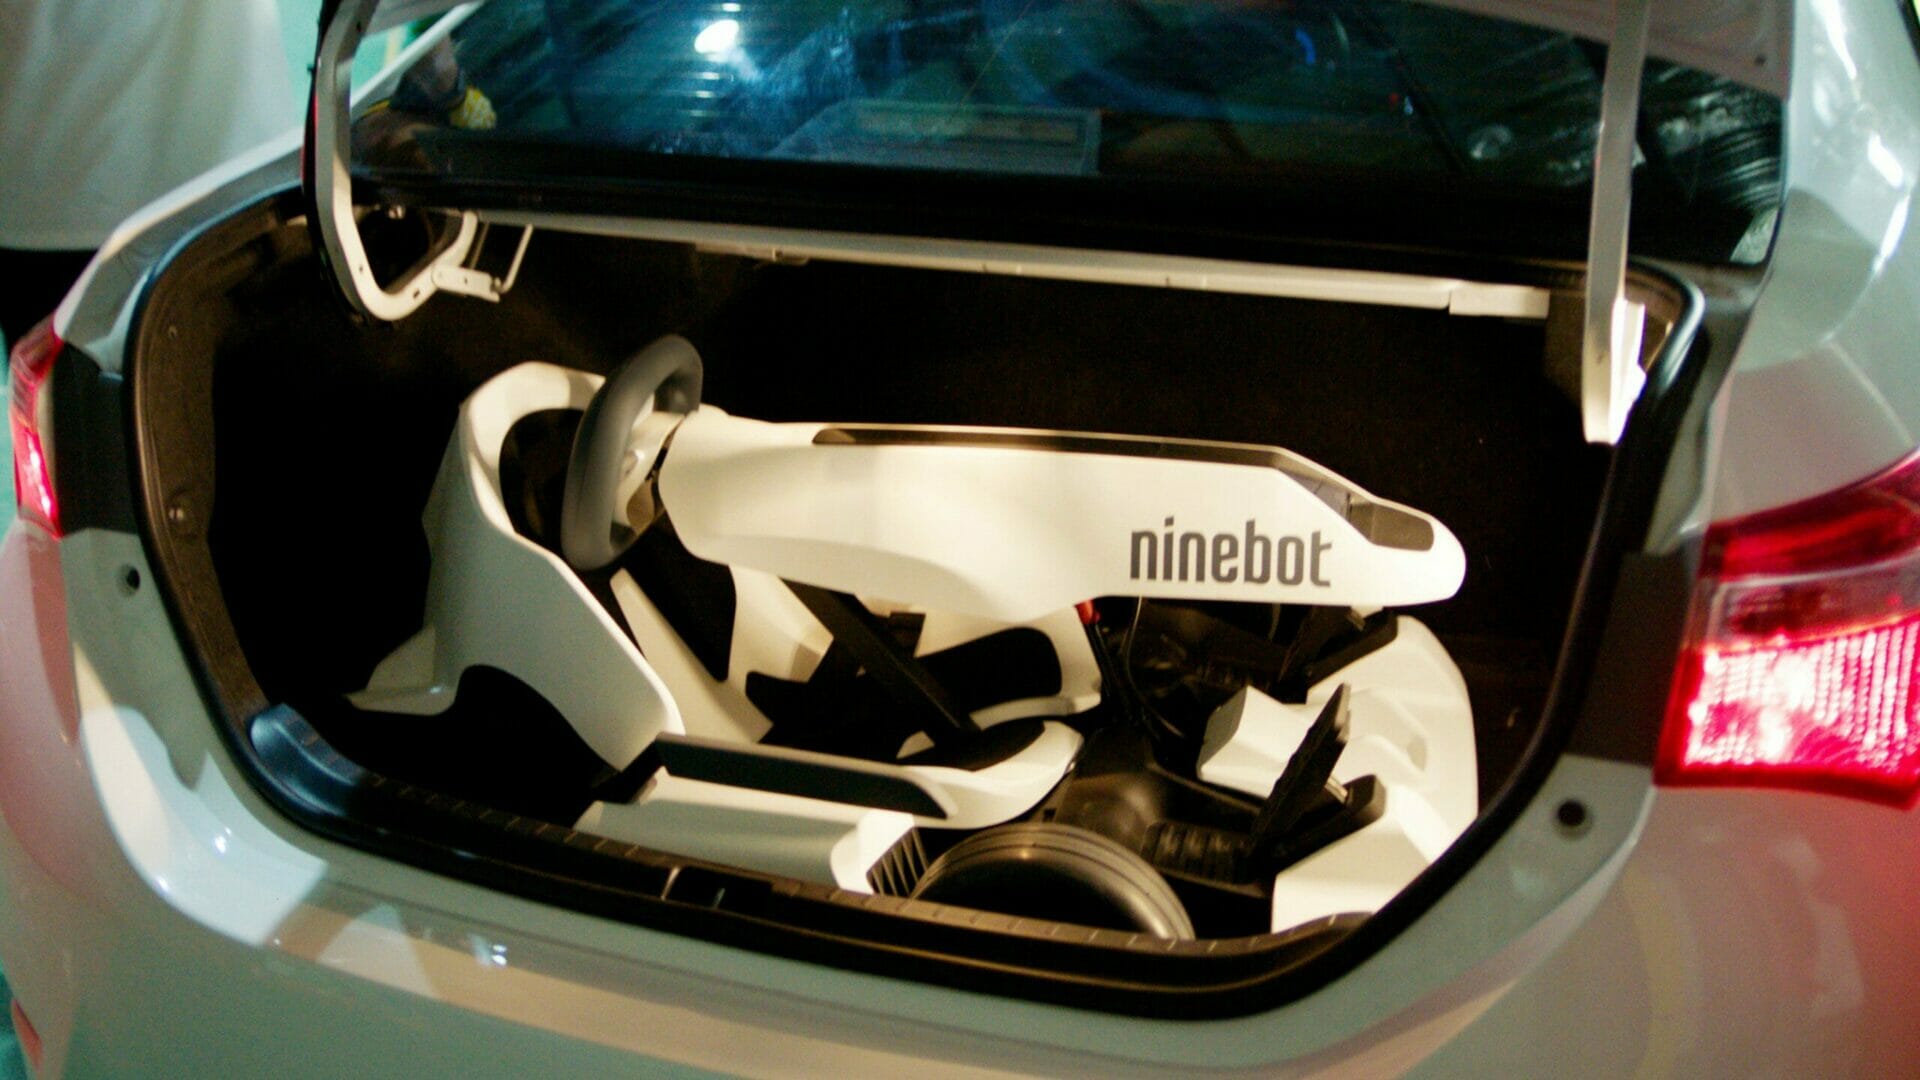 Ninebot_Gokart_folded_in_trunk_of_car-scaled